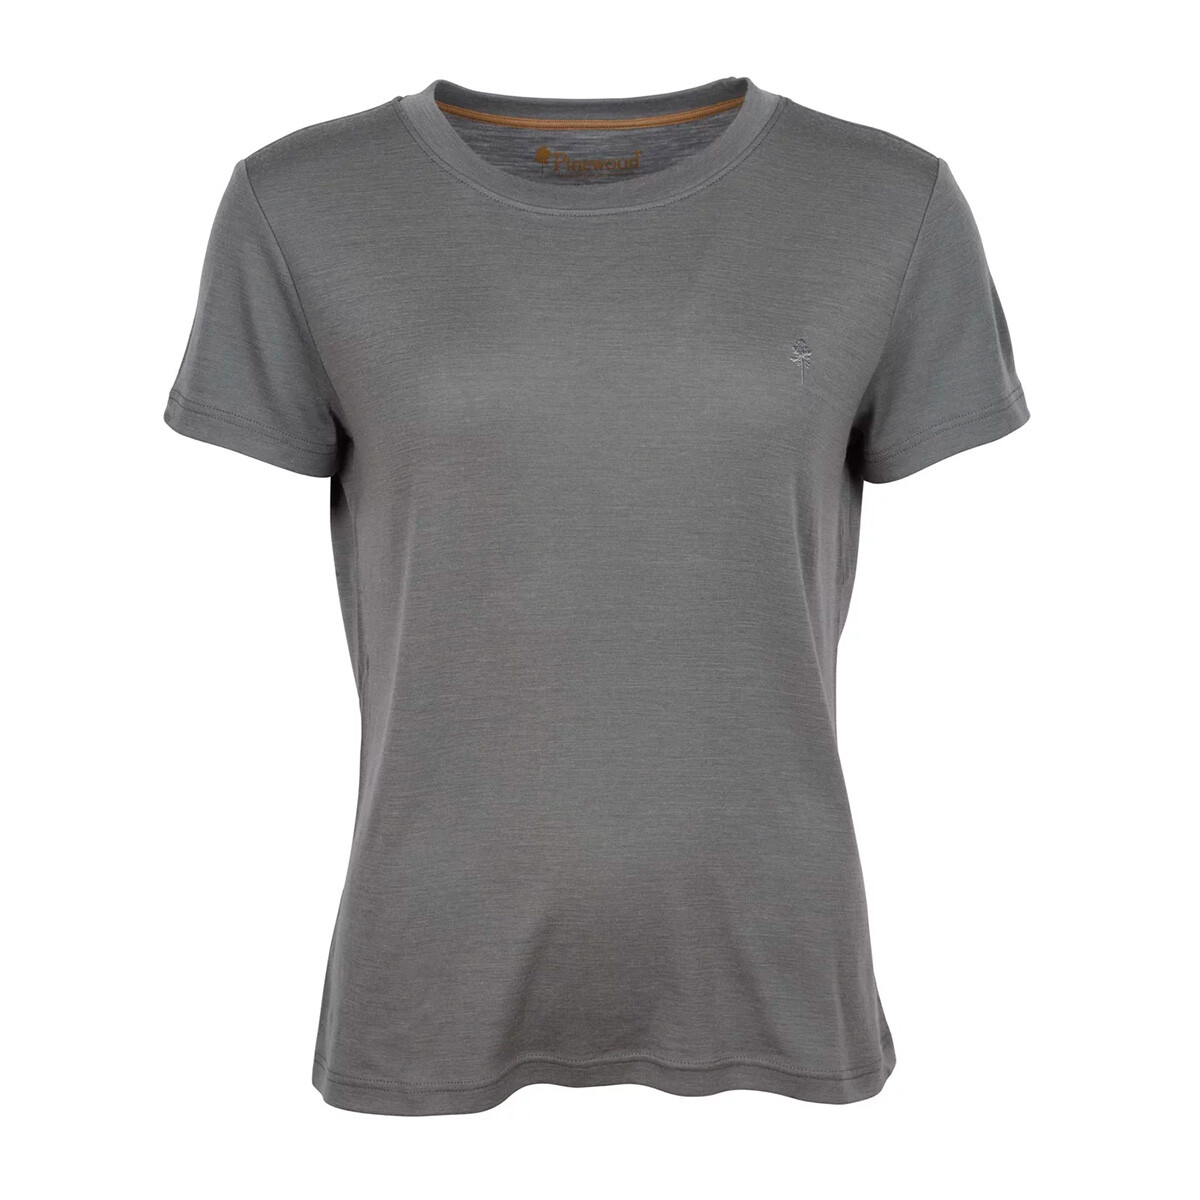 Se Pinewood Travel Merino T-shirt dame (Grey, XL) hos Specialbutikken